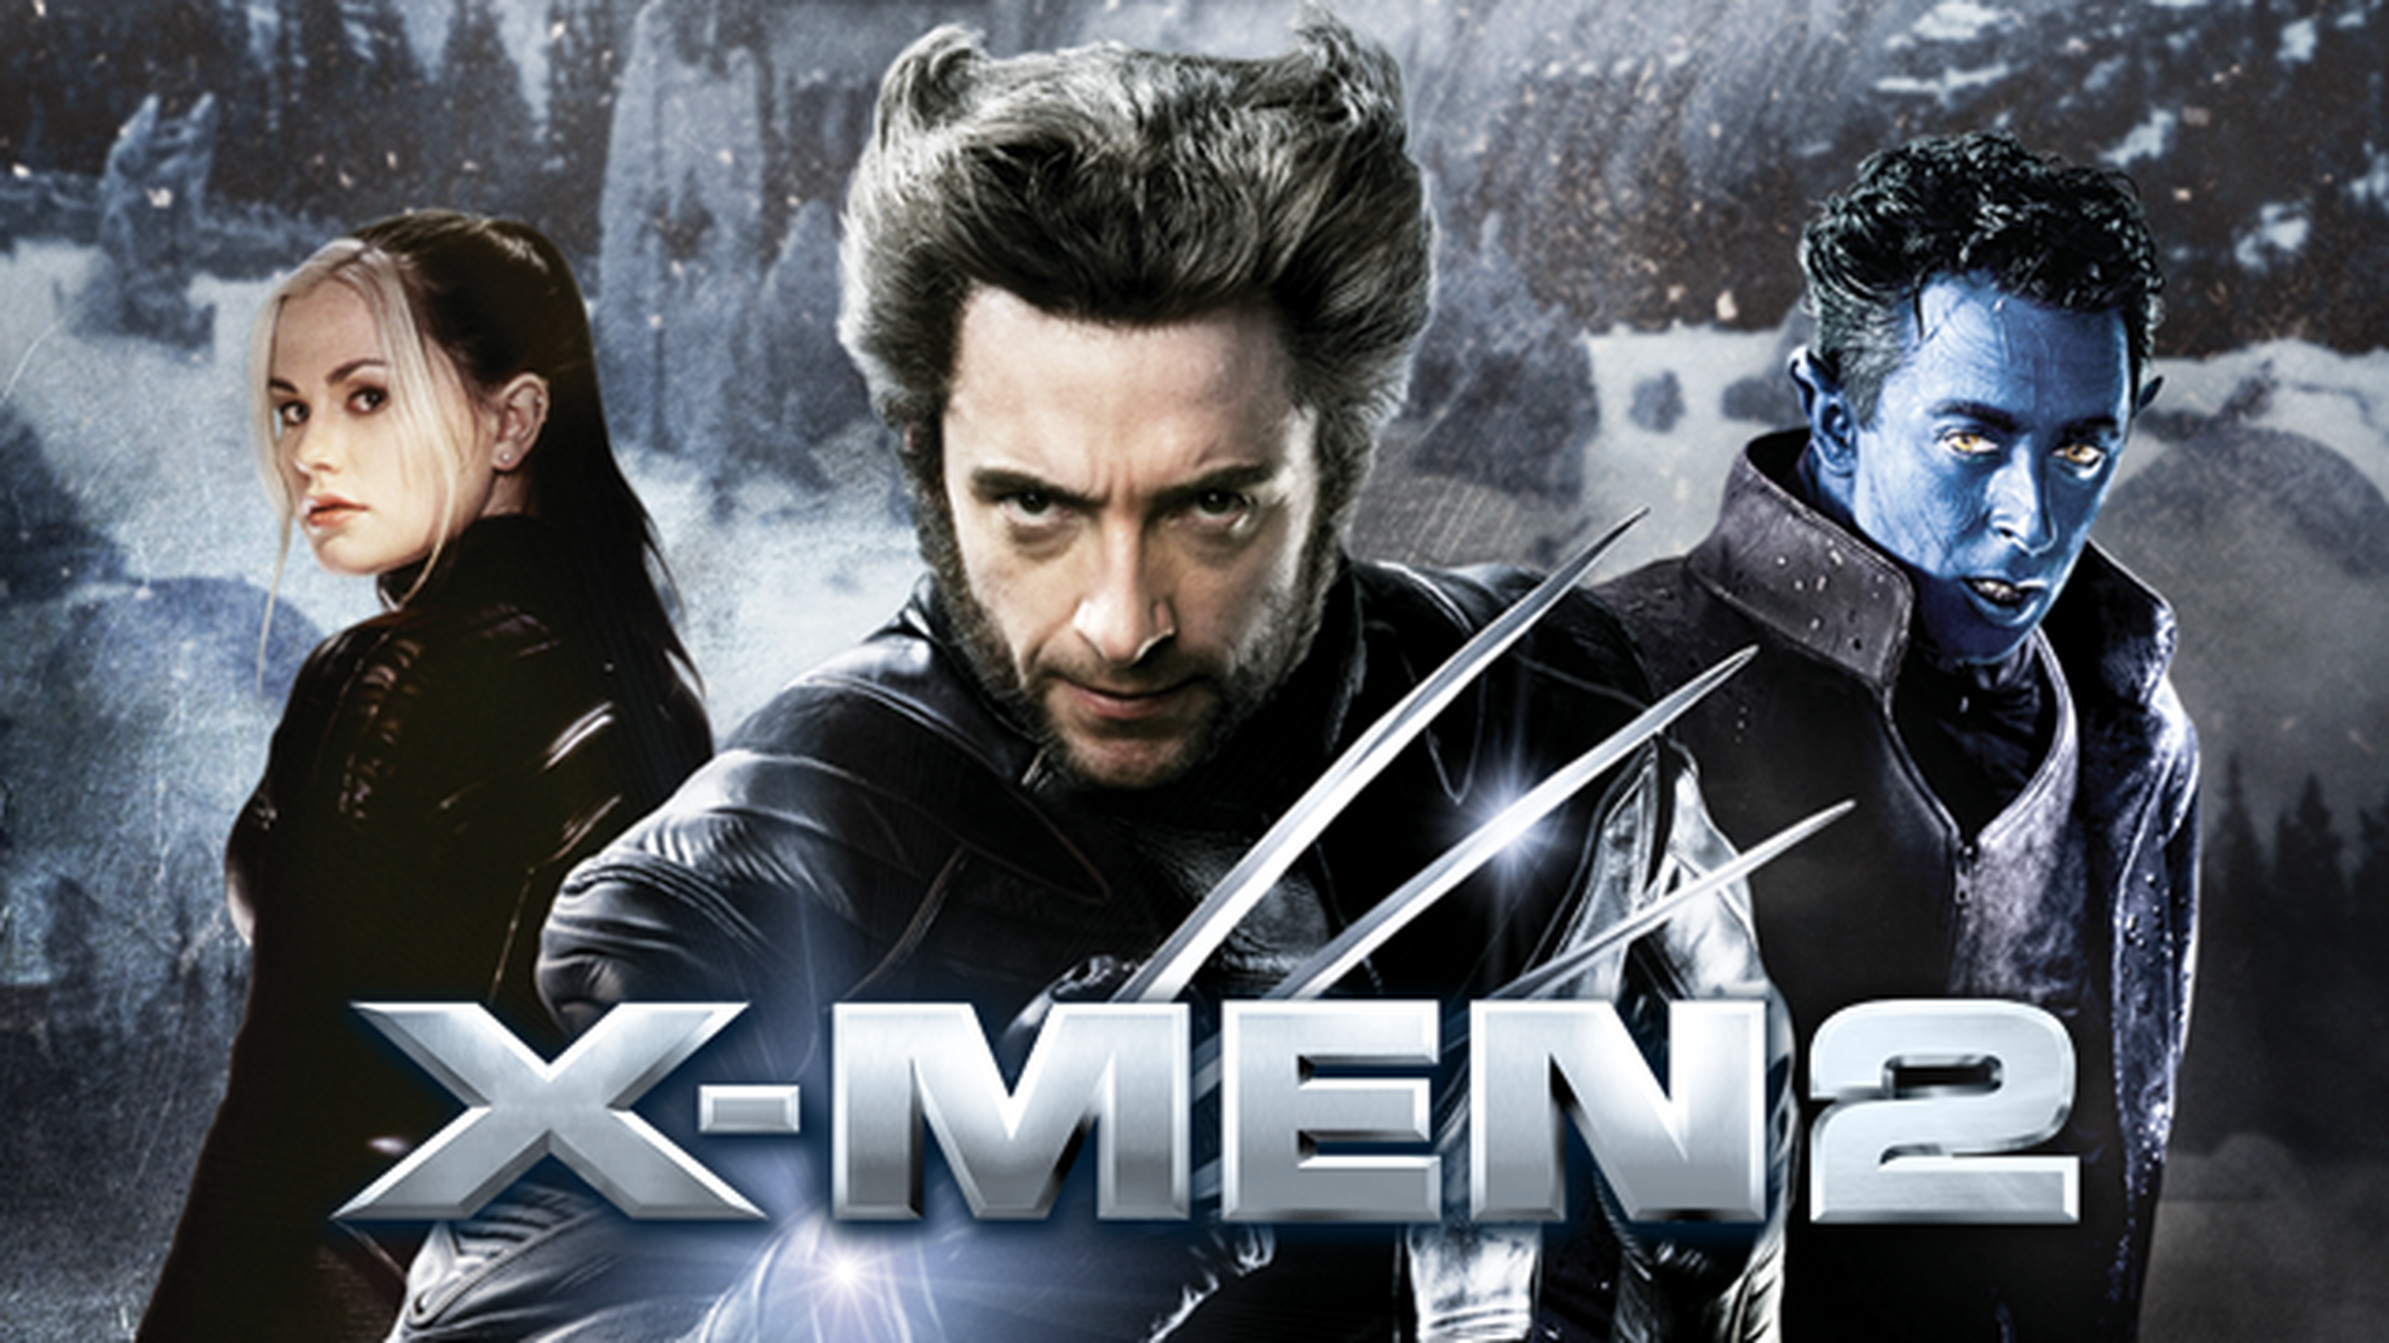 X Men ファースト ジェネレーションの動画視聴 あらすじ U Next